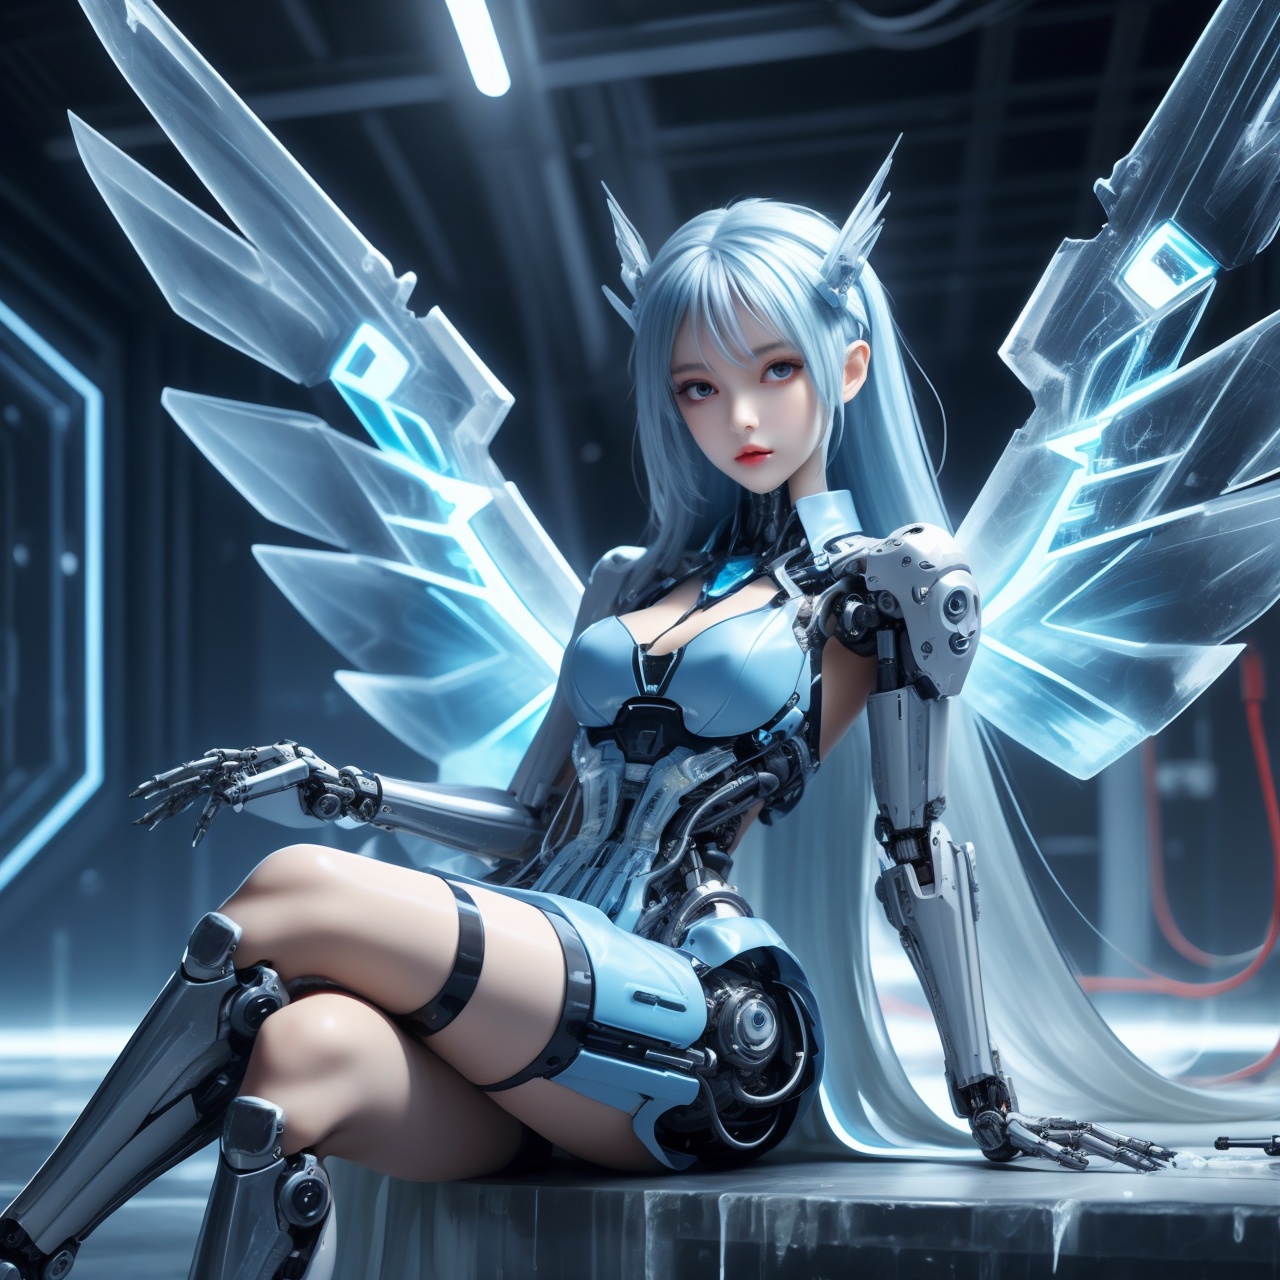 high quality,masterpiece,PVC),mechanical  wings,on stomach,sitting,crossed legs,ice blue dress,Fantasy,cyberpunk,Semi mechanical girl,cyborg,